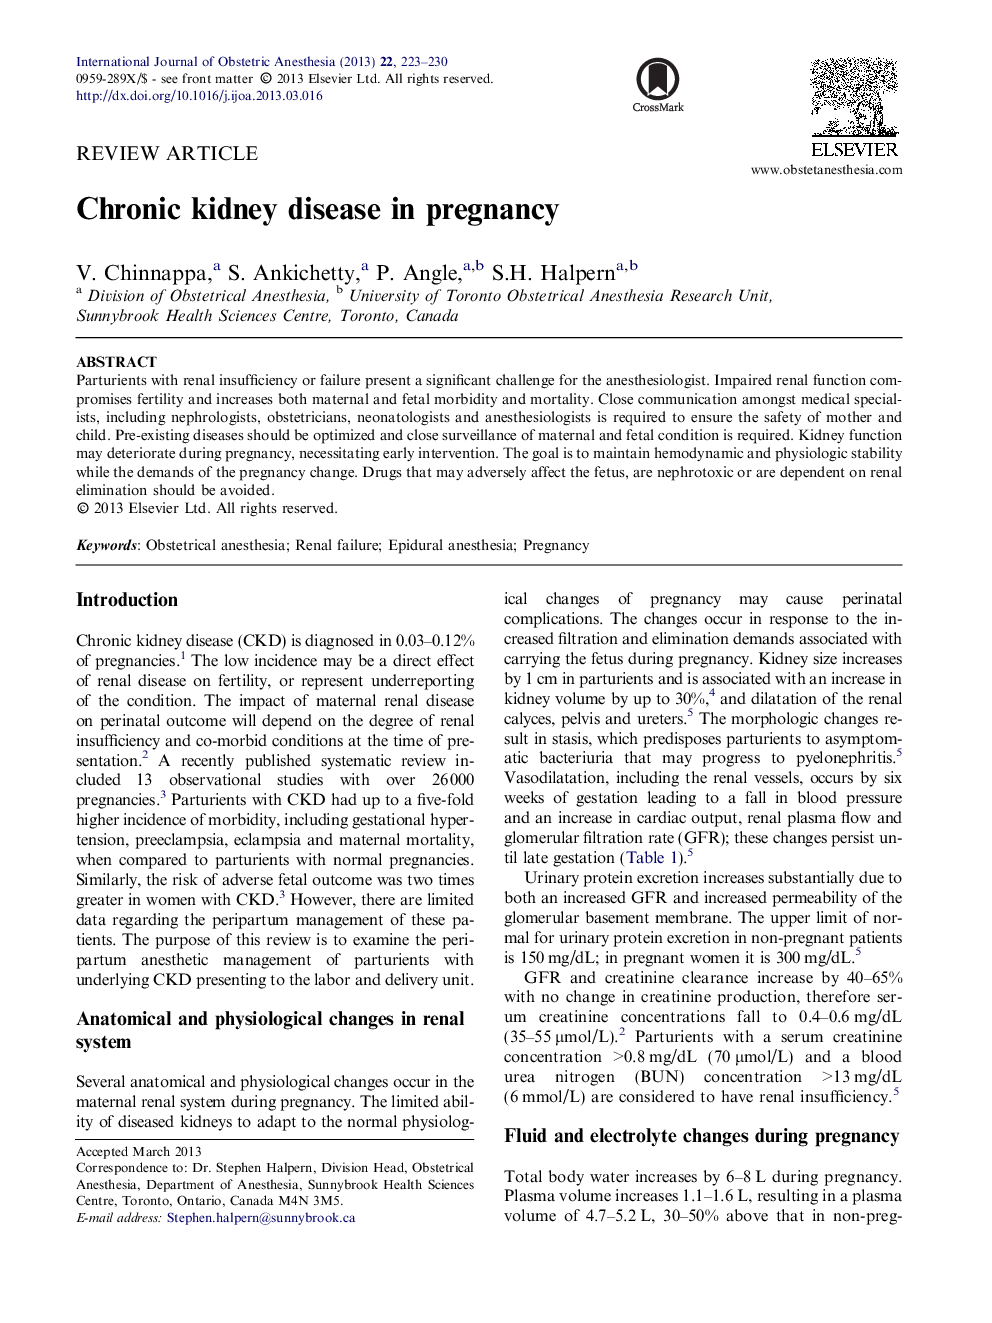 Chronic kidney disease in pregnancy